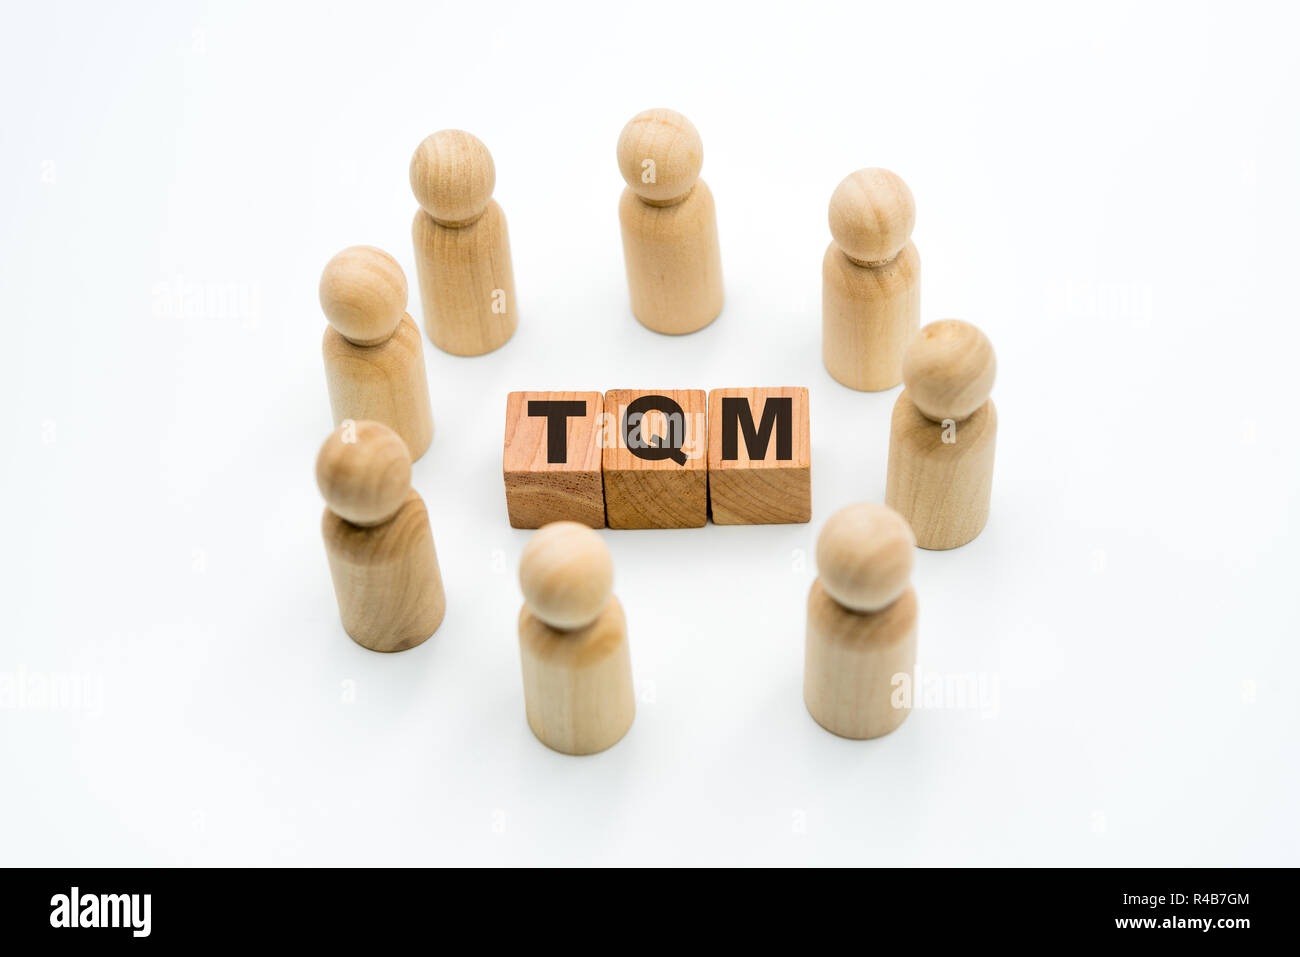 Figuras de madera como equipo empresarial en círculo alrededor de siglas TQM Total Quality Management, aislado sobre fondo blanco, minimalista concepto Foto de stock